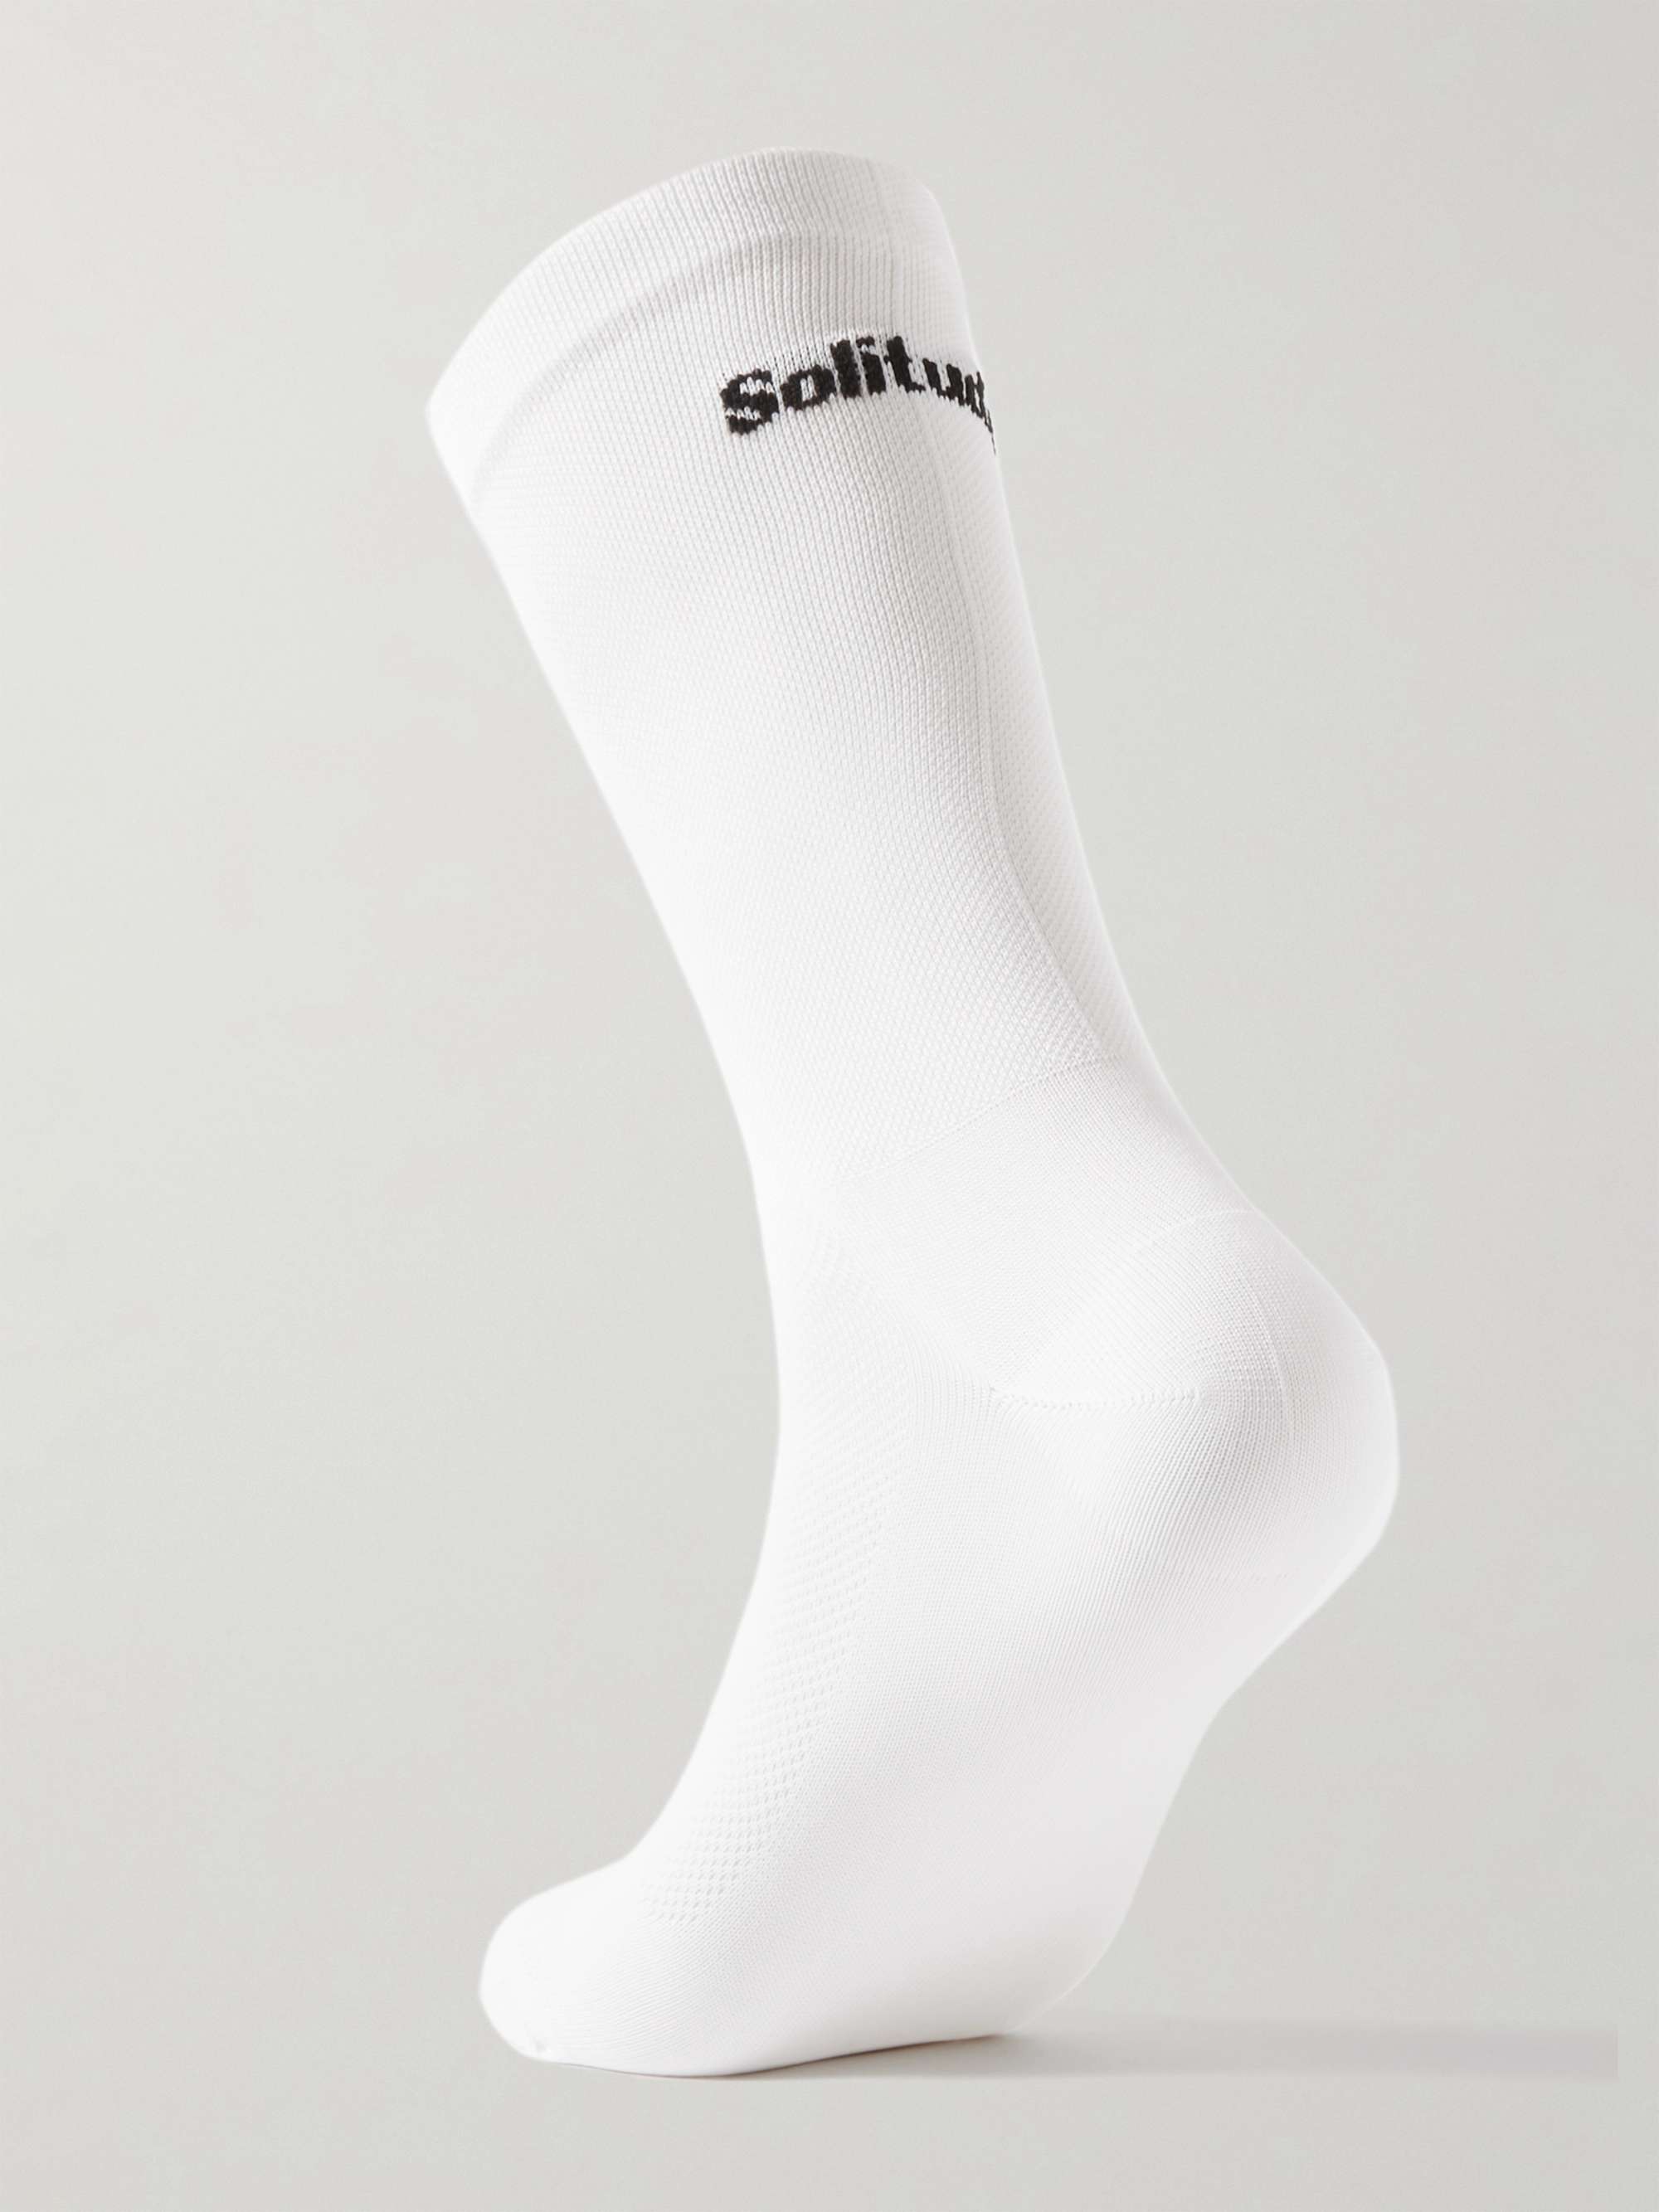 PAS NORMAL STUDIOS Solitude PROLEN®YARN-Blend Cycling Socks for Men ...